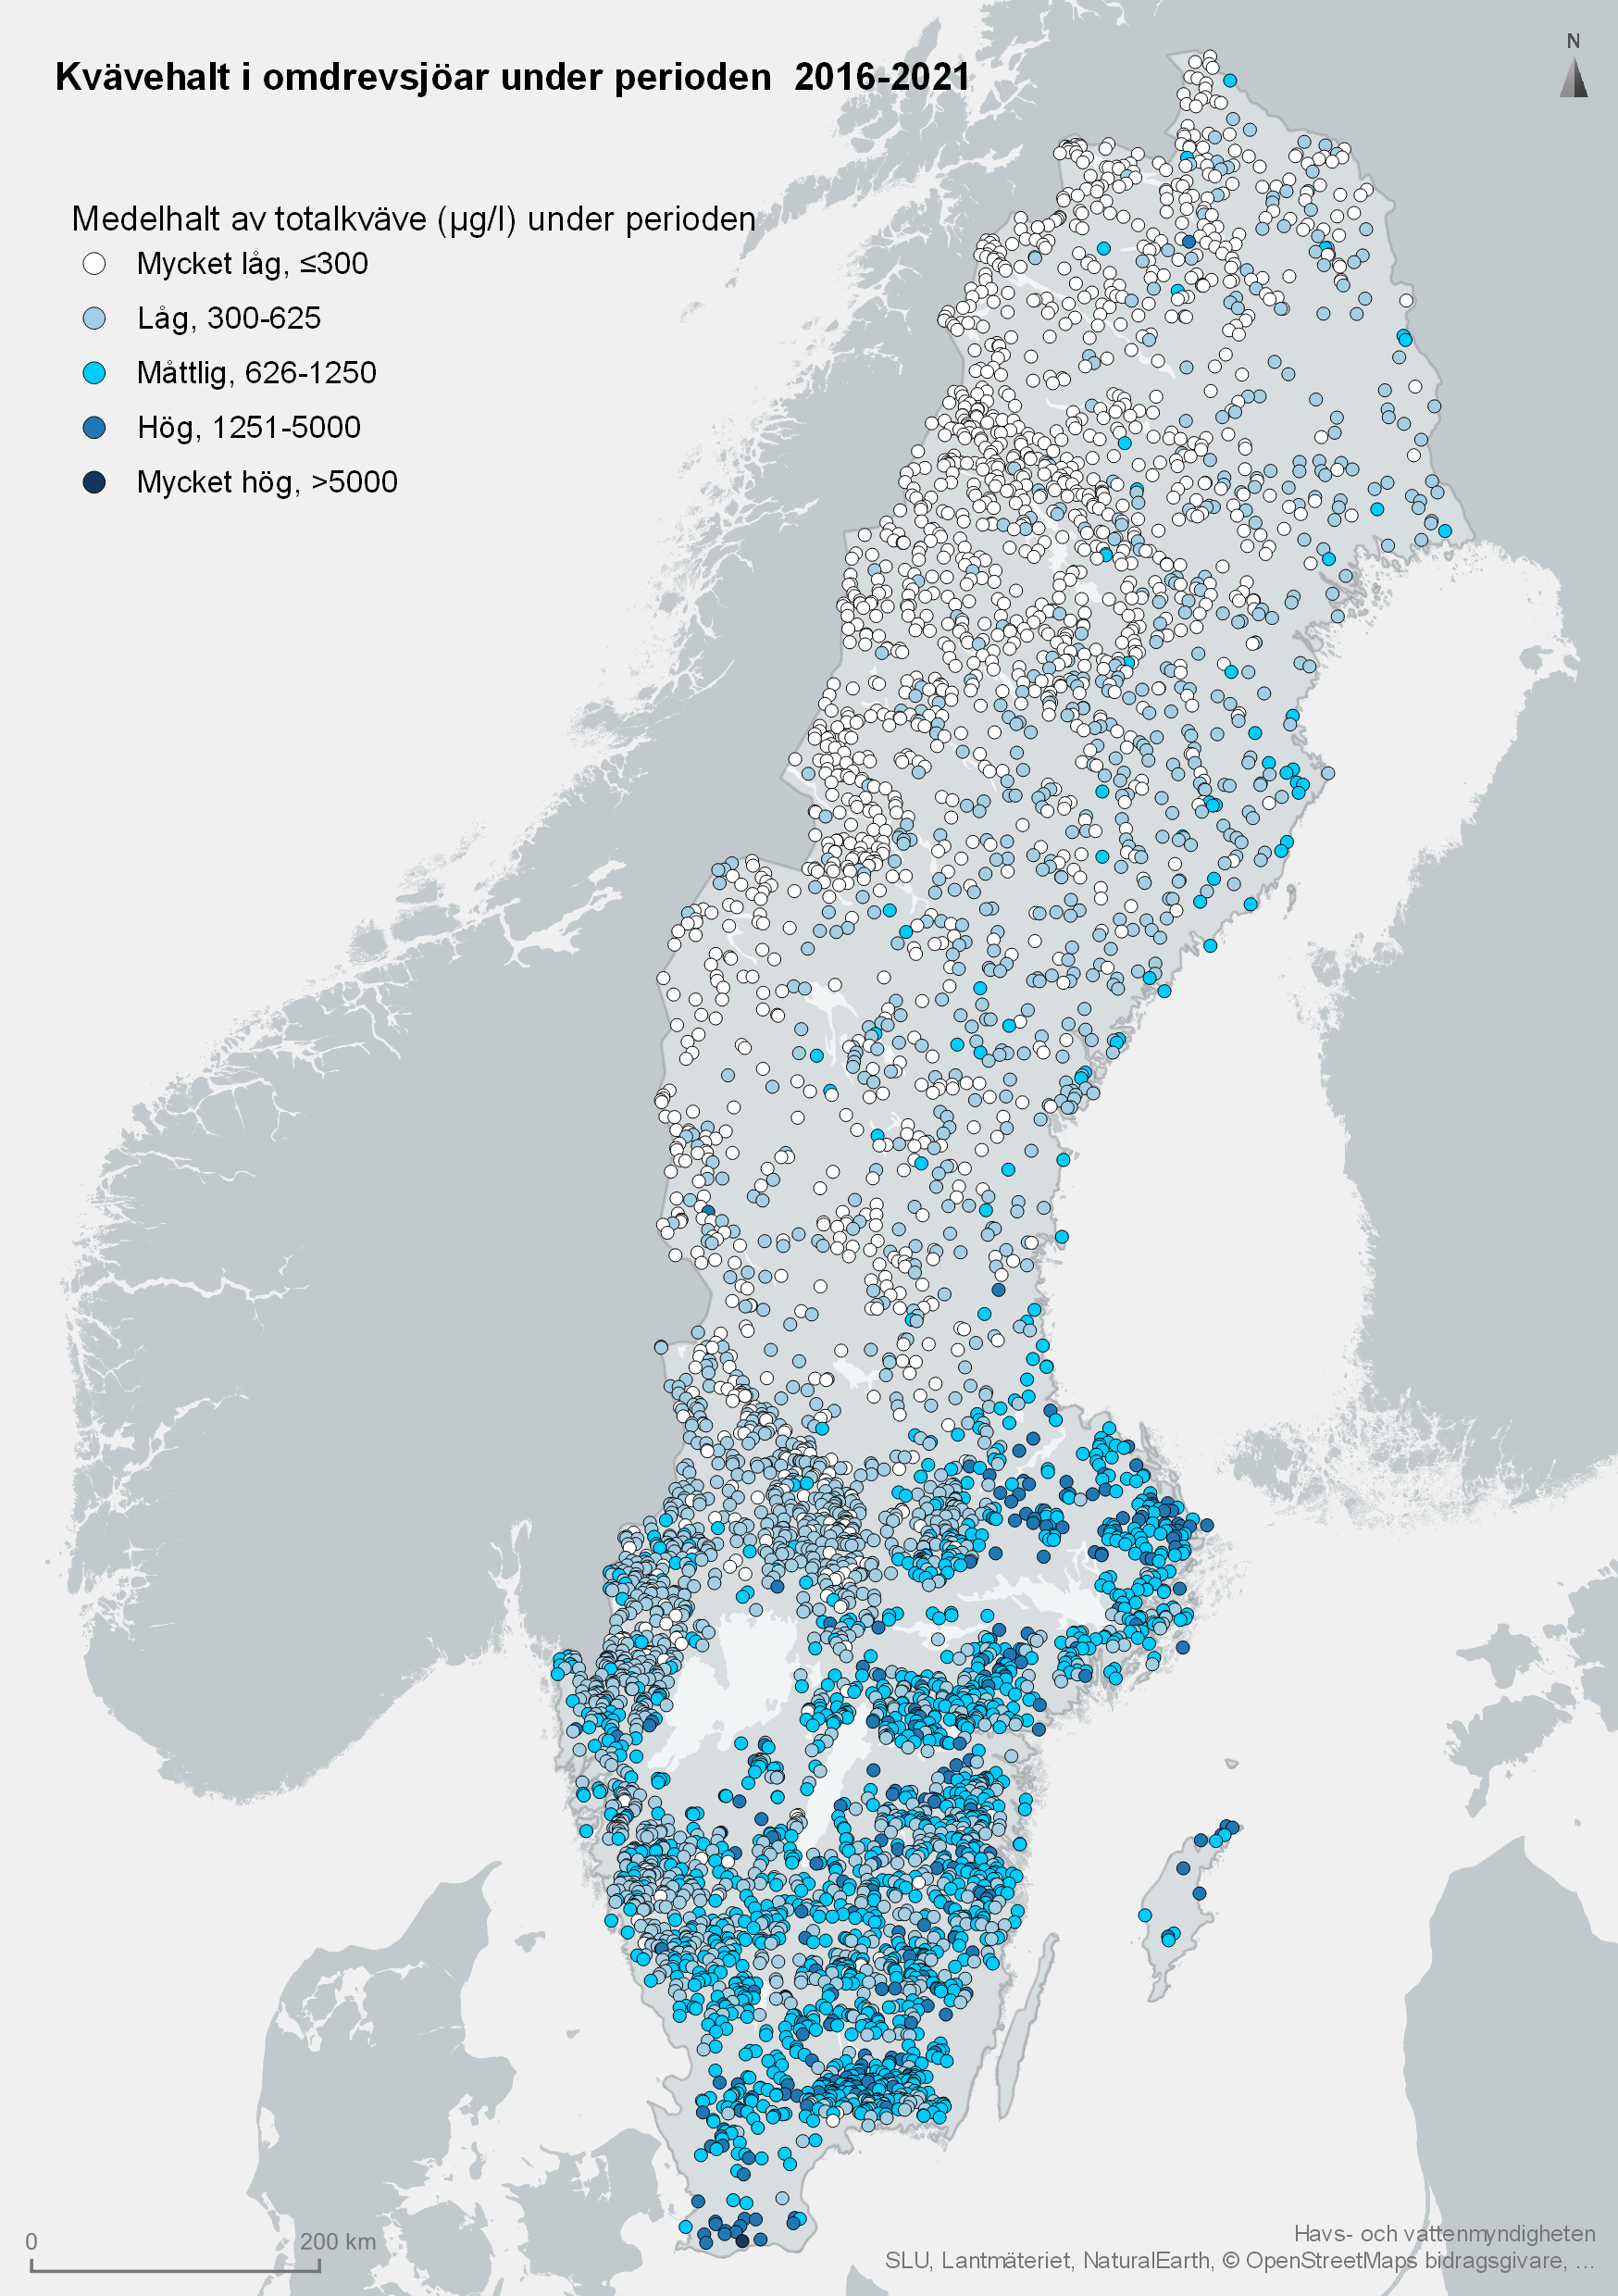 Medelhalt av totalkväve i omdrevssjöar 2016-2021. Karta, illustration.